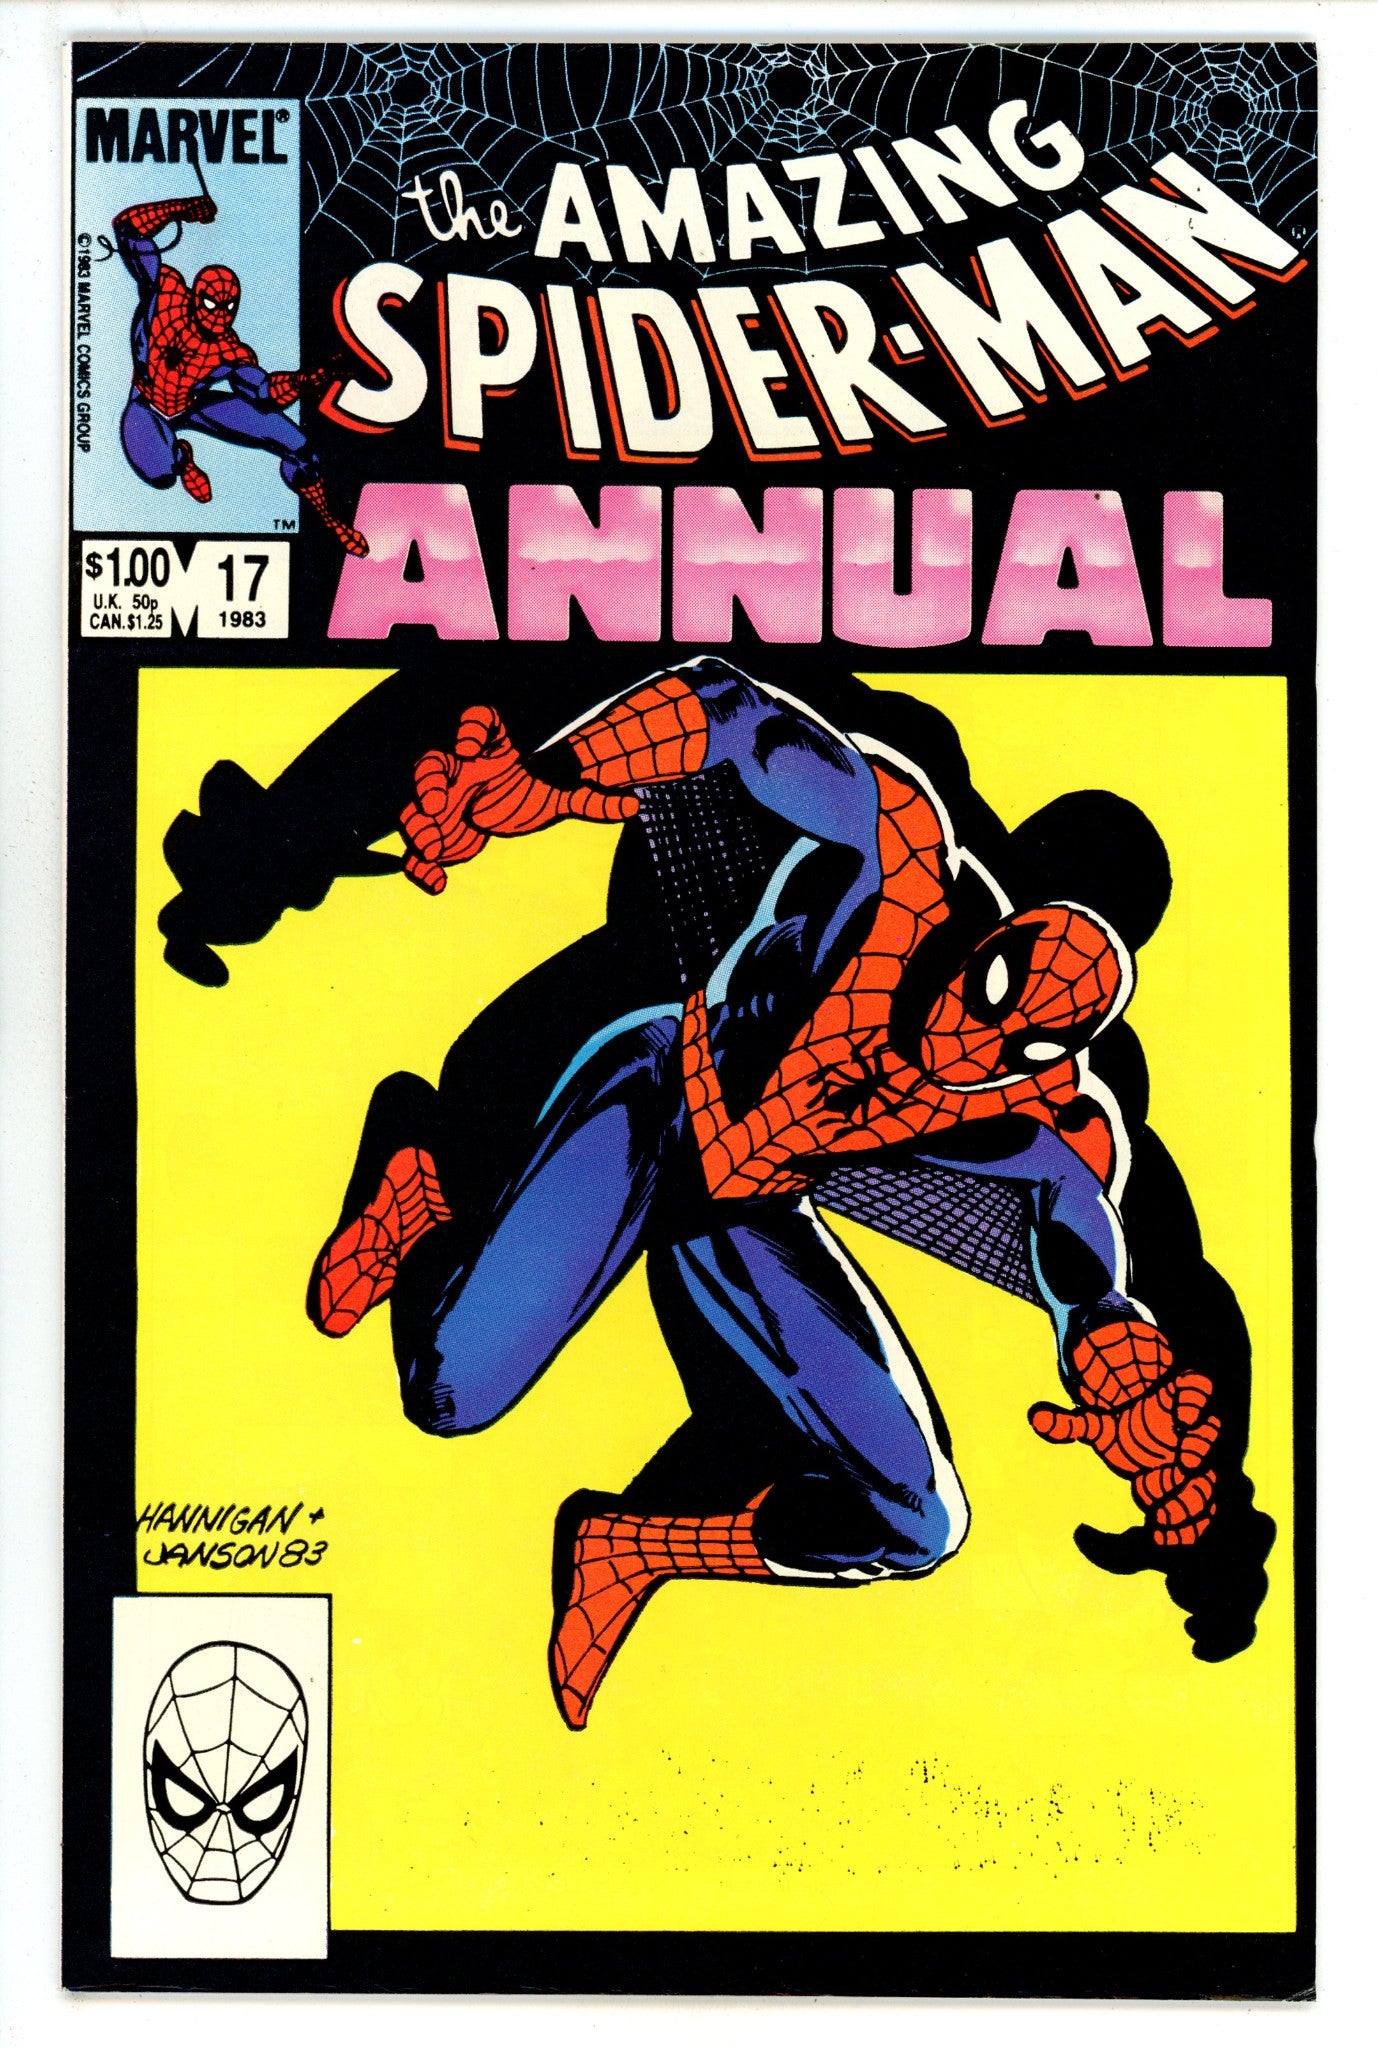 The Amazing Spider-Man Annual Vol 1 17 VF (8.0) (1983) 